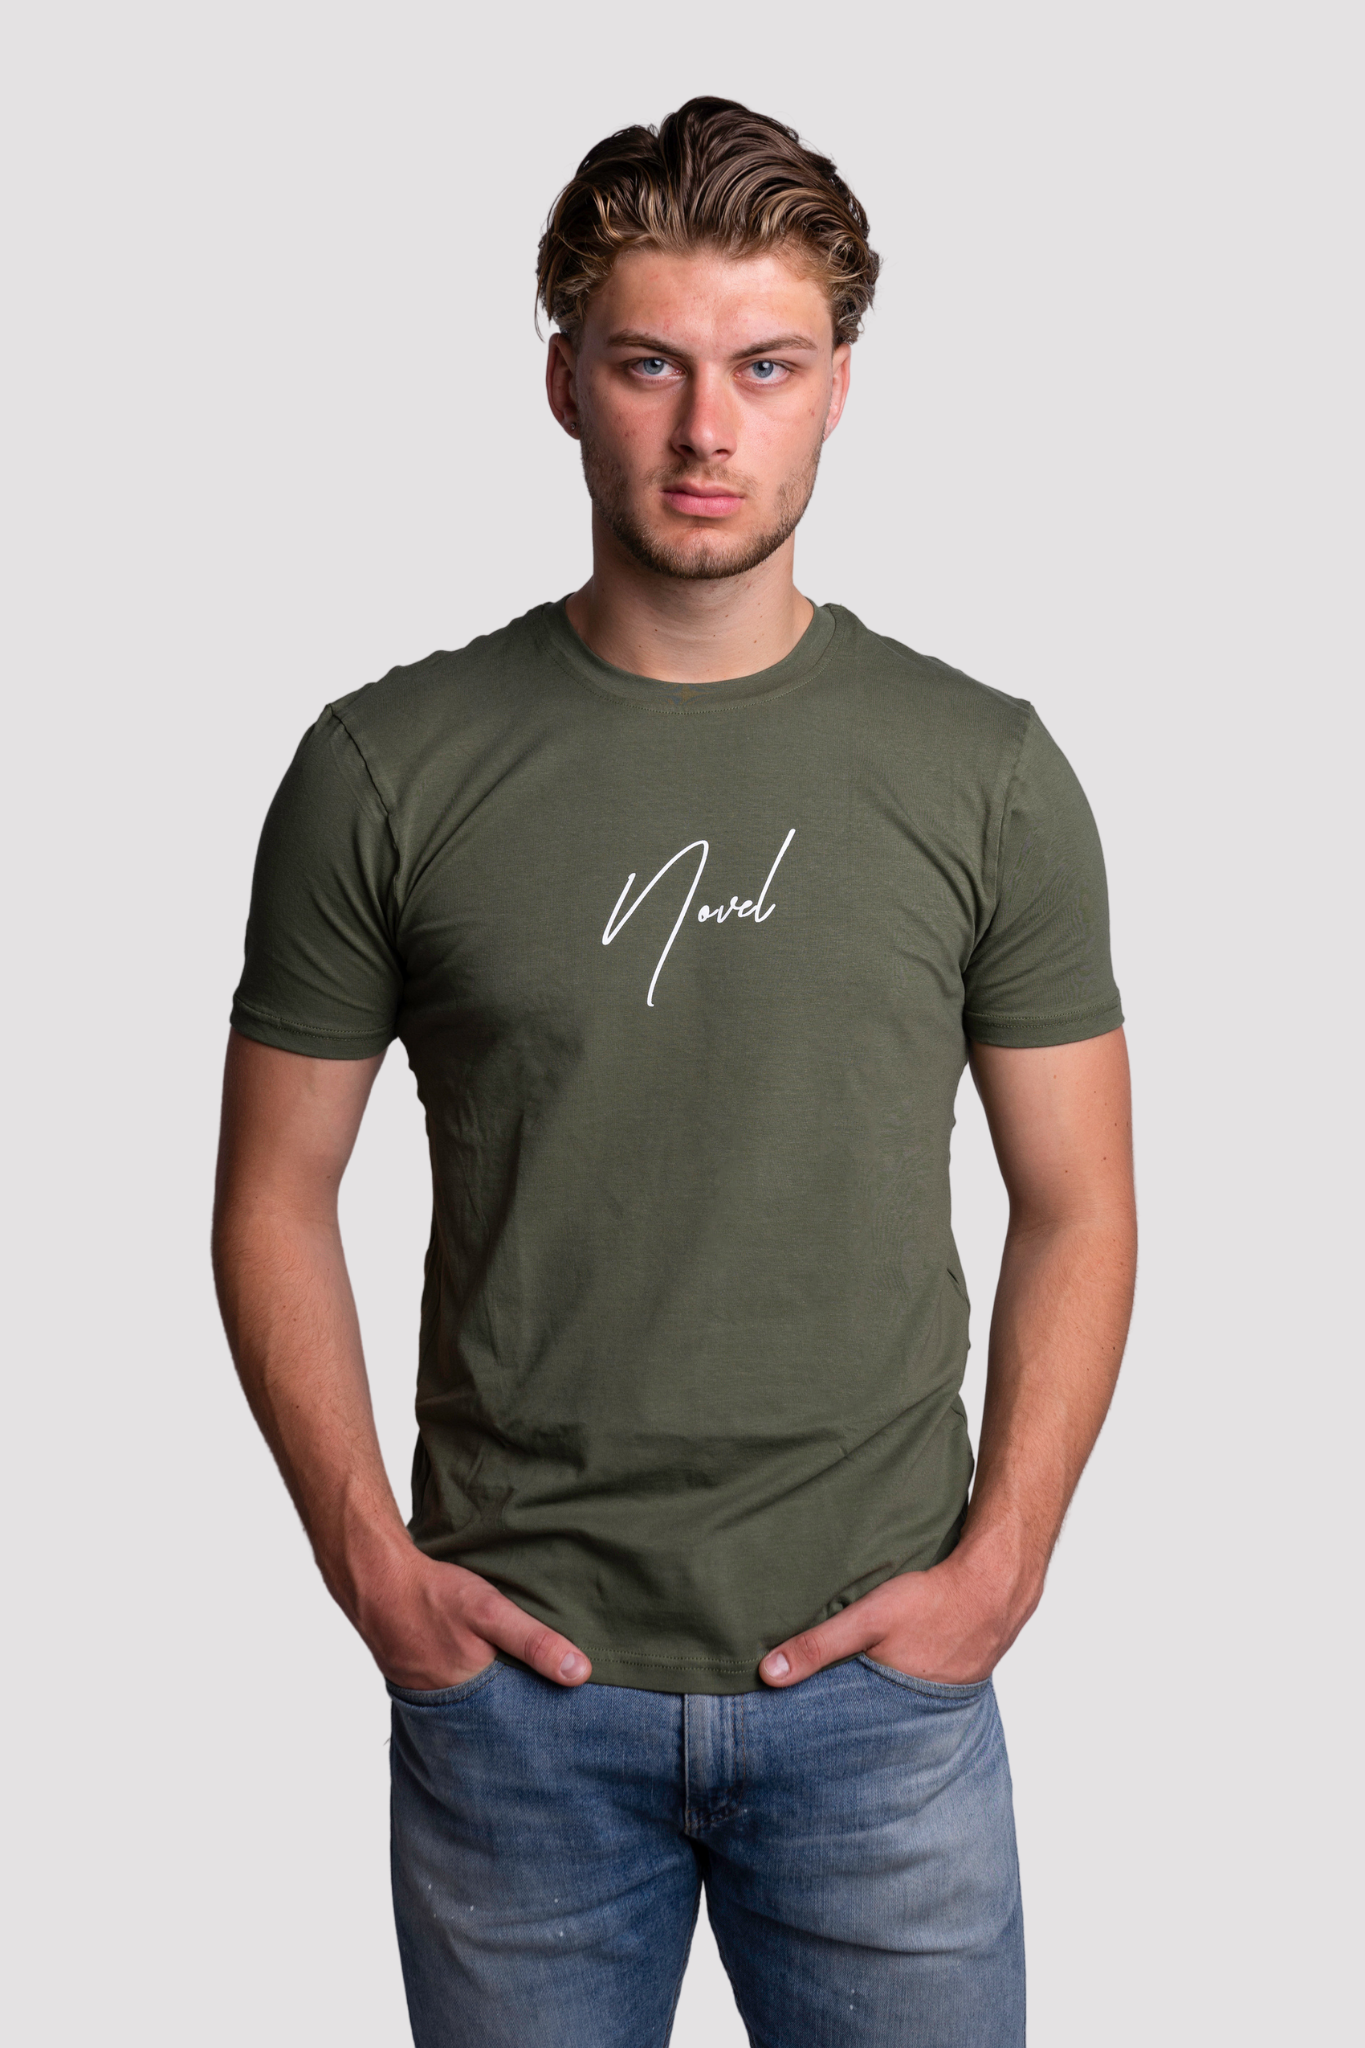 NOVEL 'STAY HUMBLE $' T-shirt Army Green